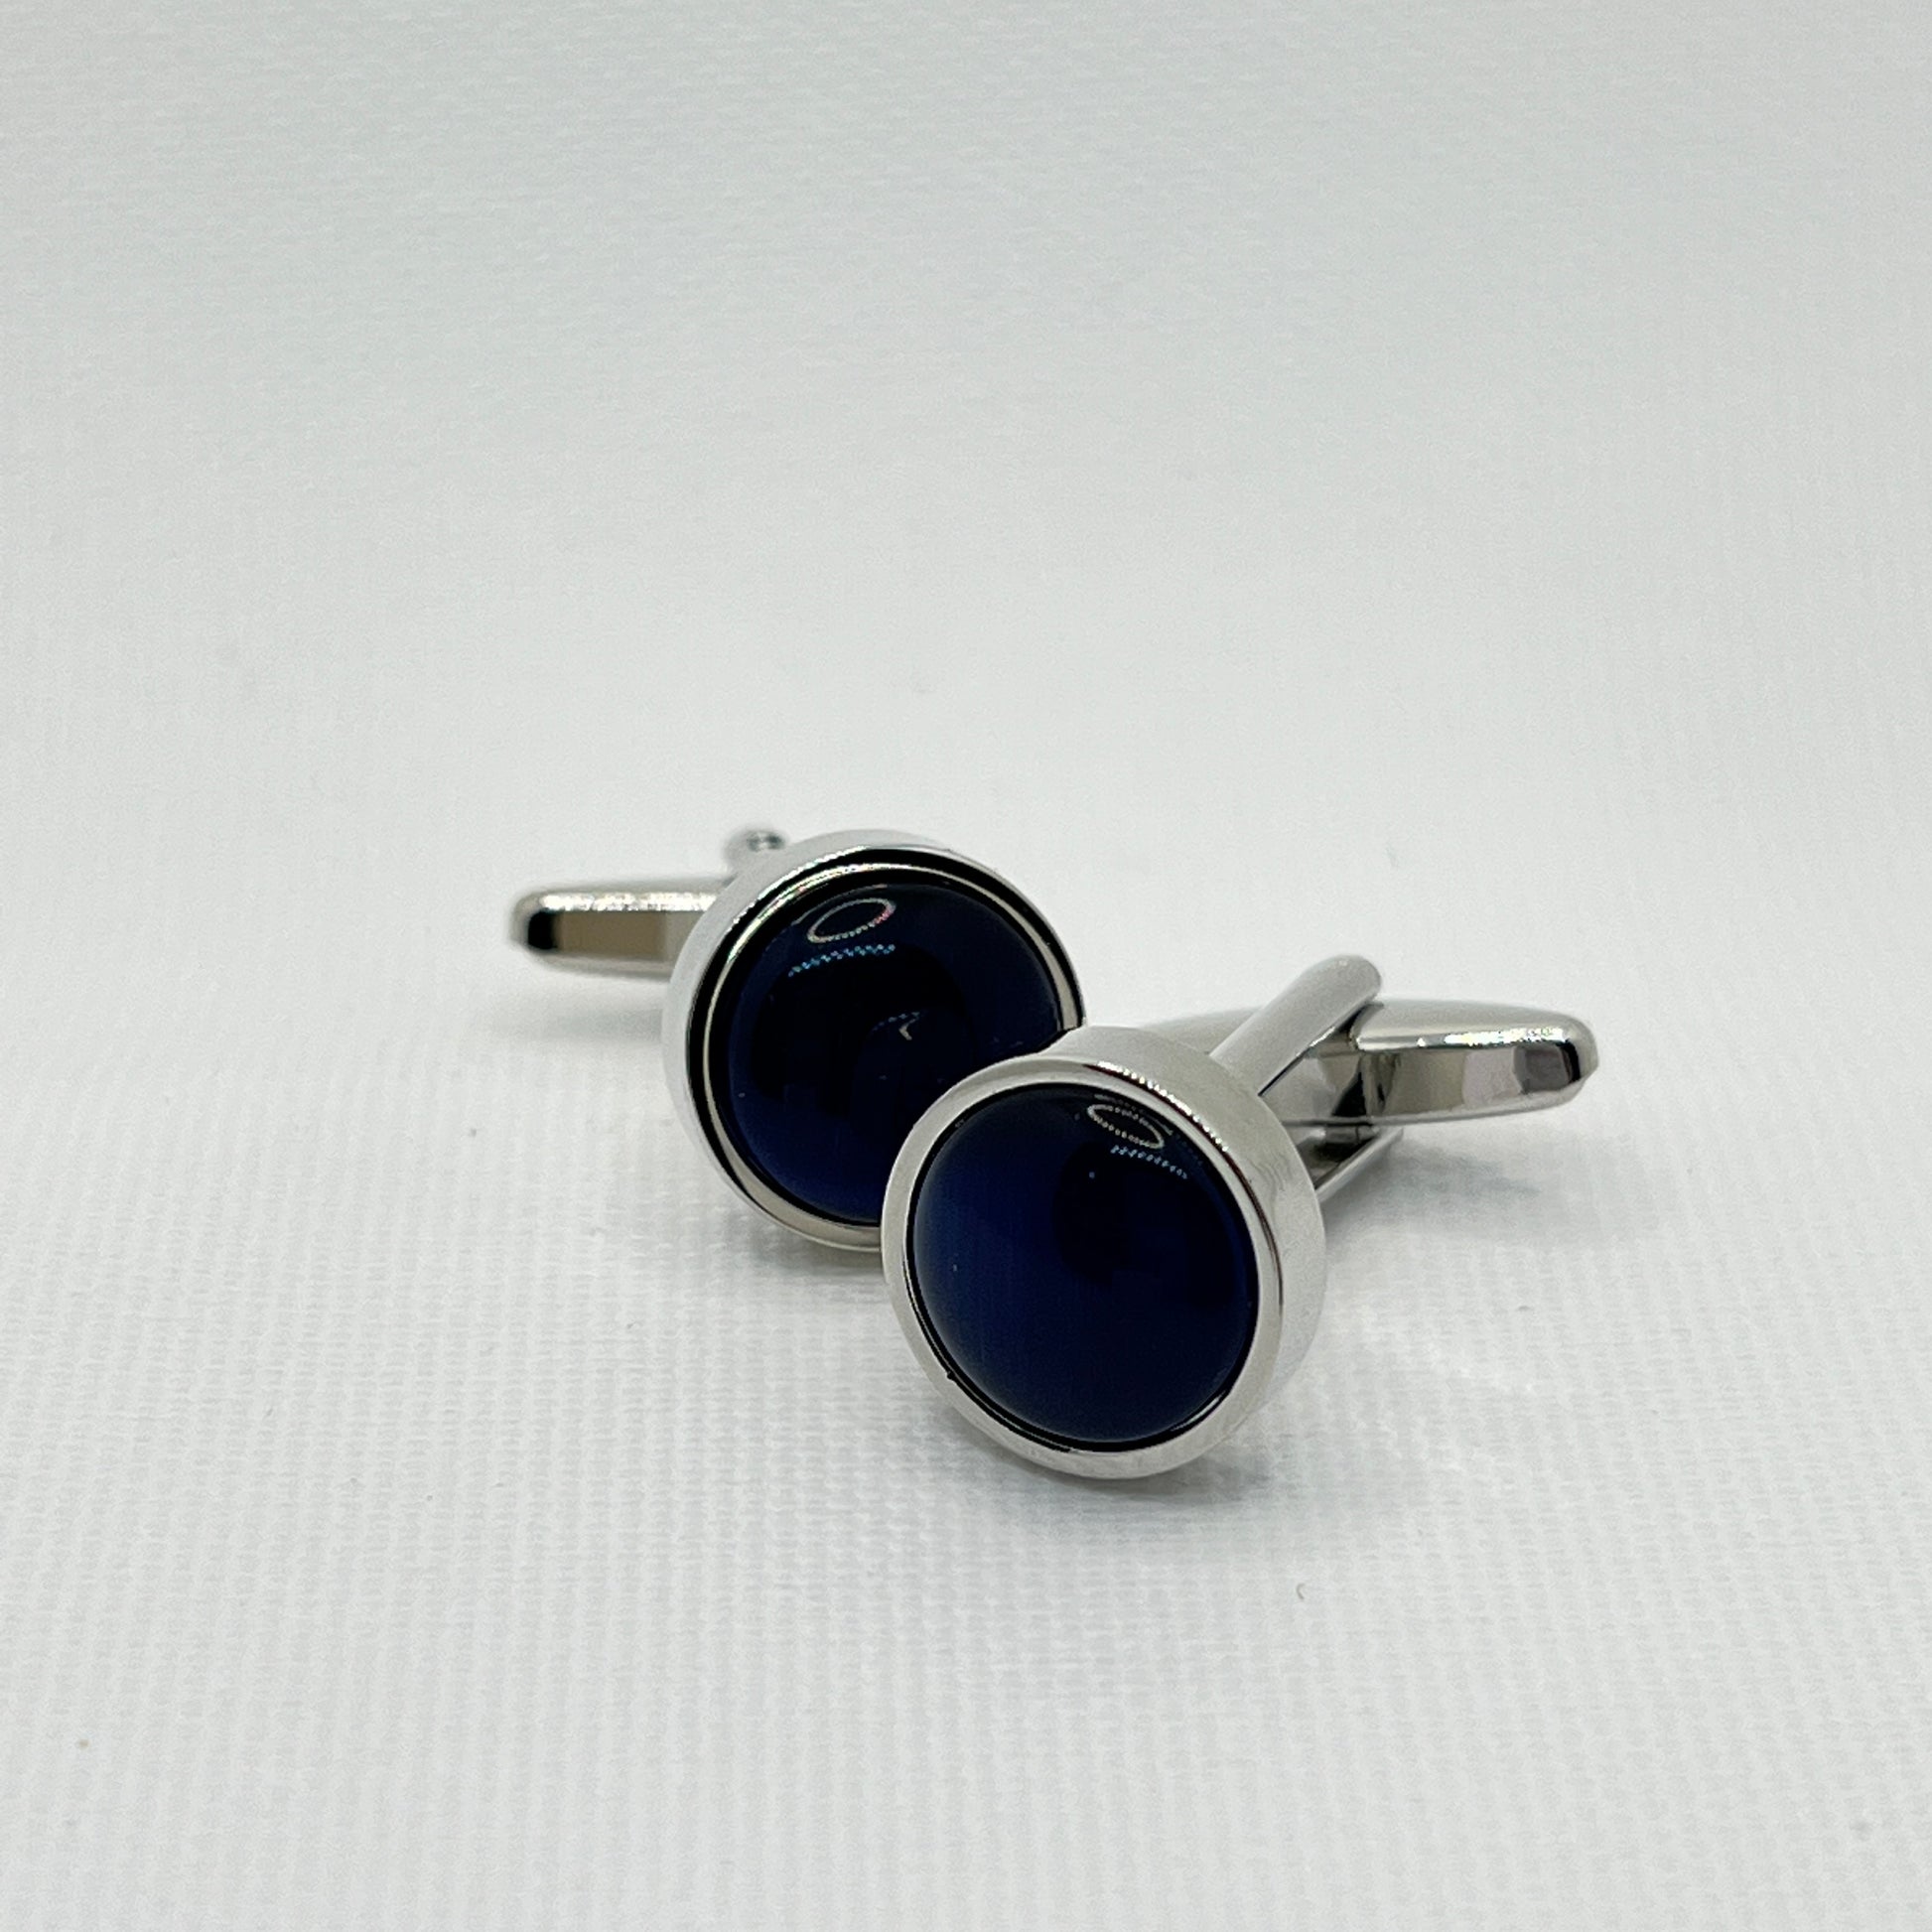 Tasker & Shaw | Luxury Menswear | Round silver cufflinks with deepest blue inlay